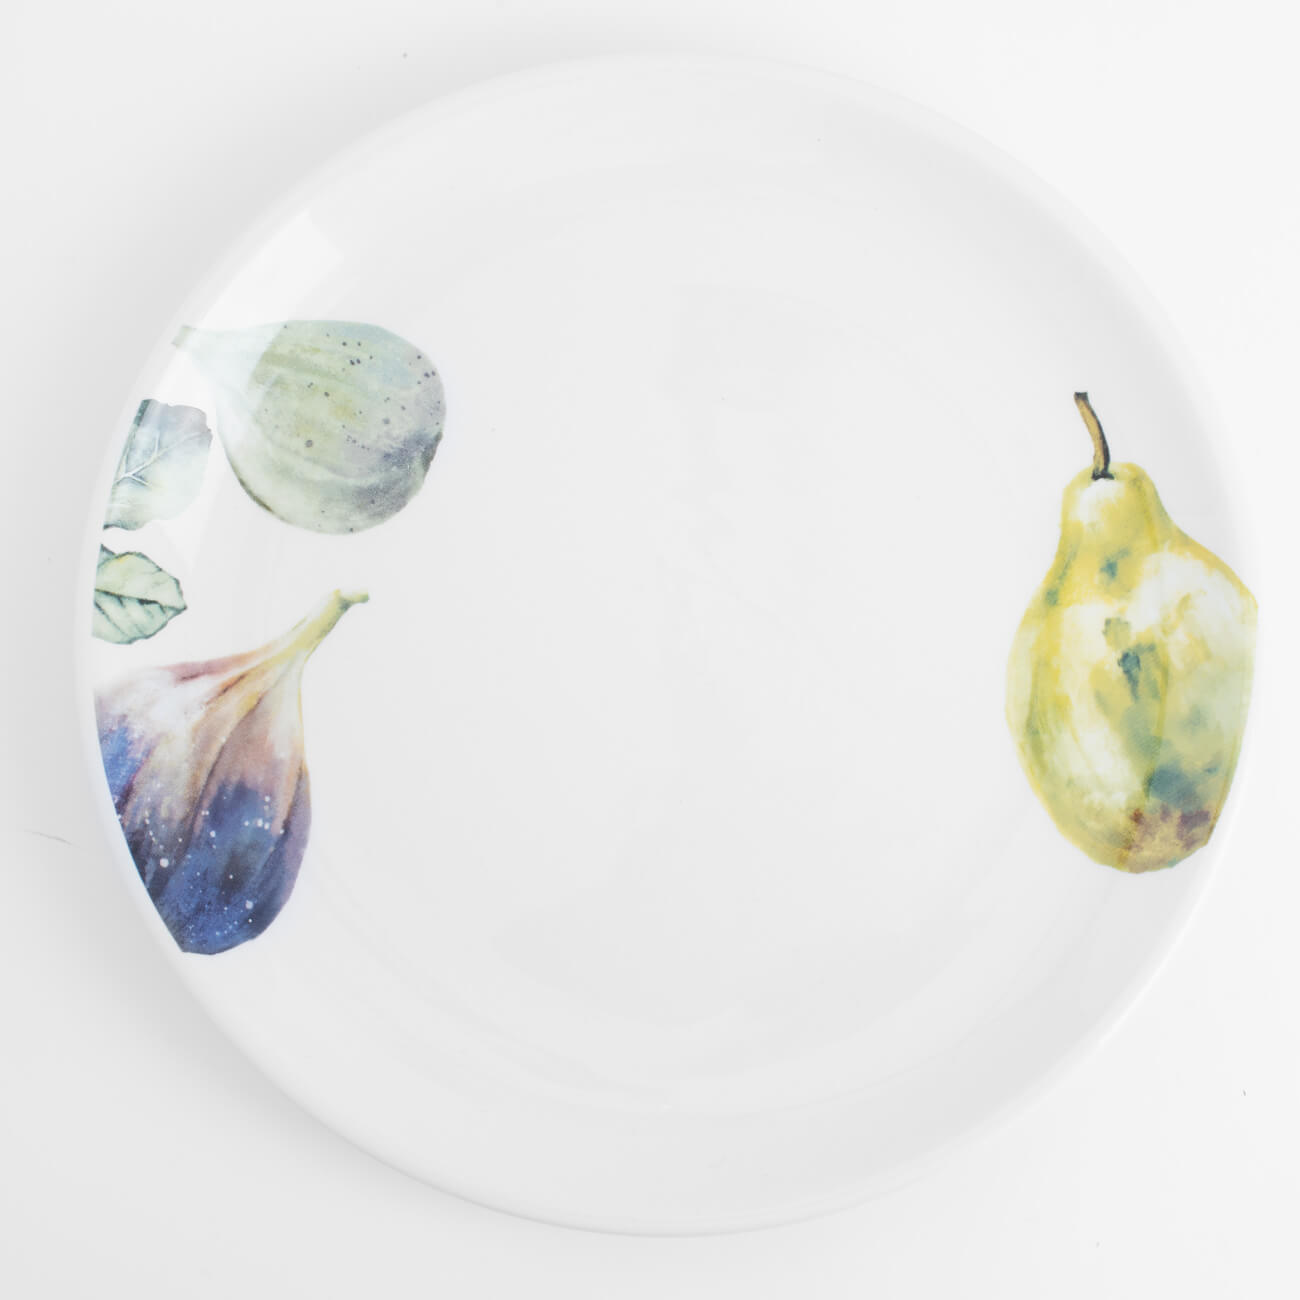 Тарелка закусочная, 21 см, керамика, белая, Инжир и груша, Fruit garden тарелка fiori estivi